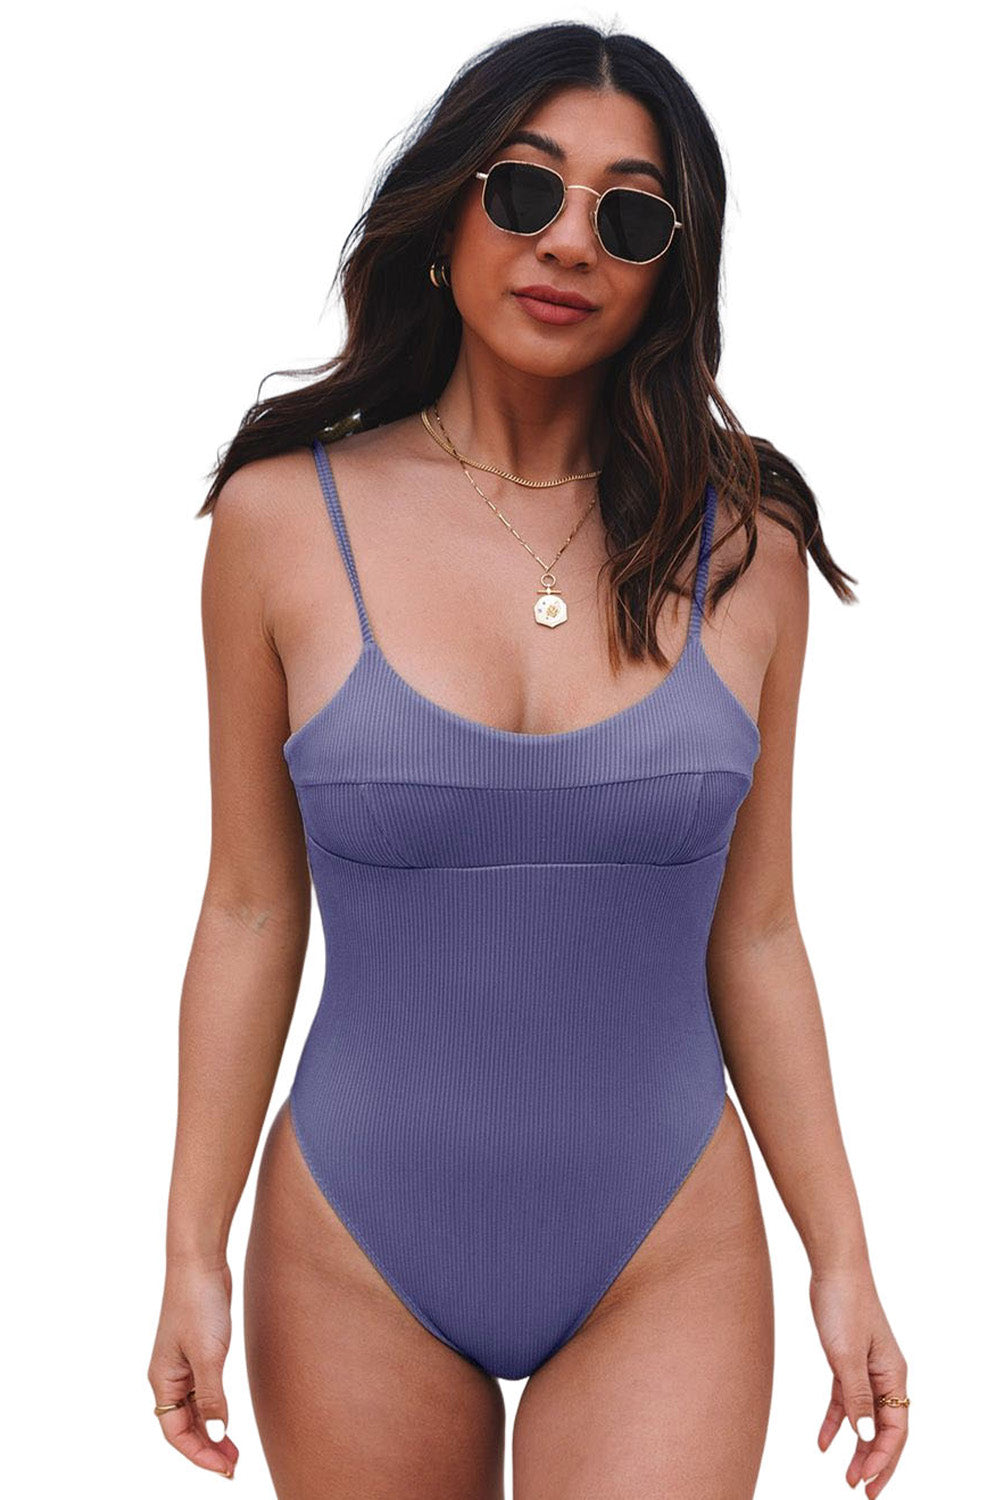 LC443450-5-S, LC443450-5-M, LC443450-5-L, LC443450-5-XL, LC443450-5-2XL, Blue Women One Piece Swimsuit Tassel Tie Straps Ribbed Bathing Suit